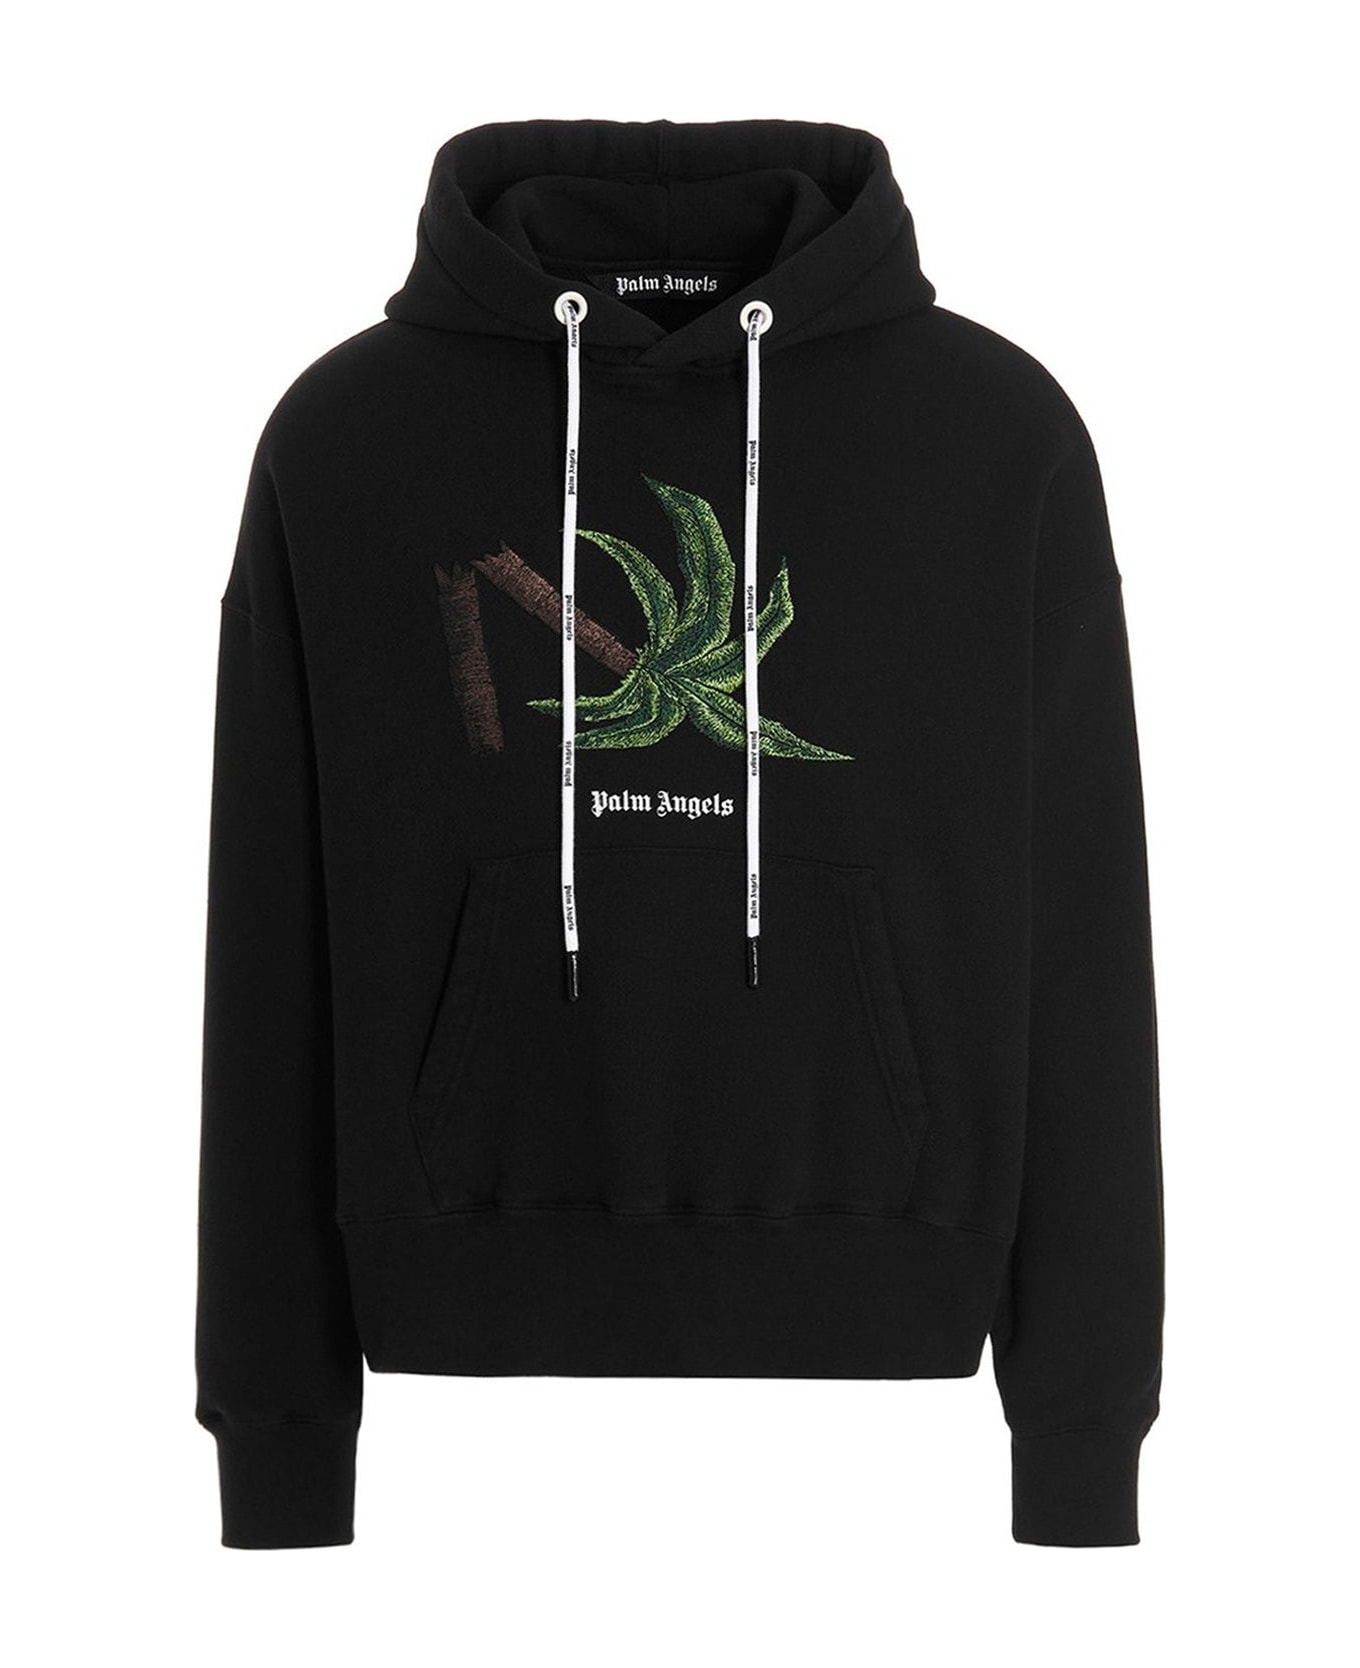 Palm Angels Hooded Sweatshirt - Black